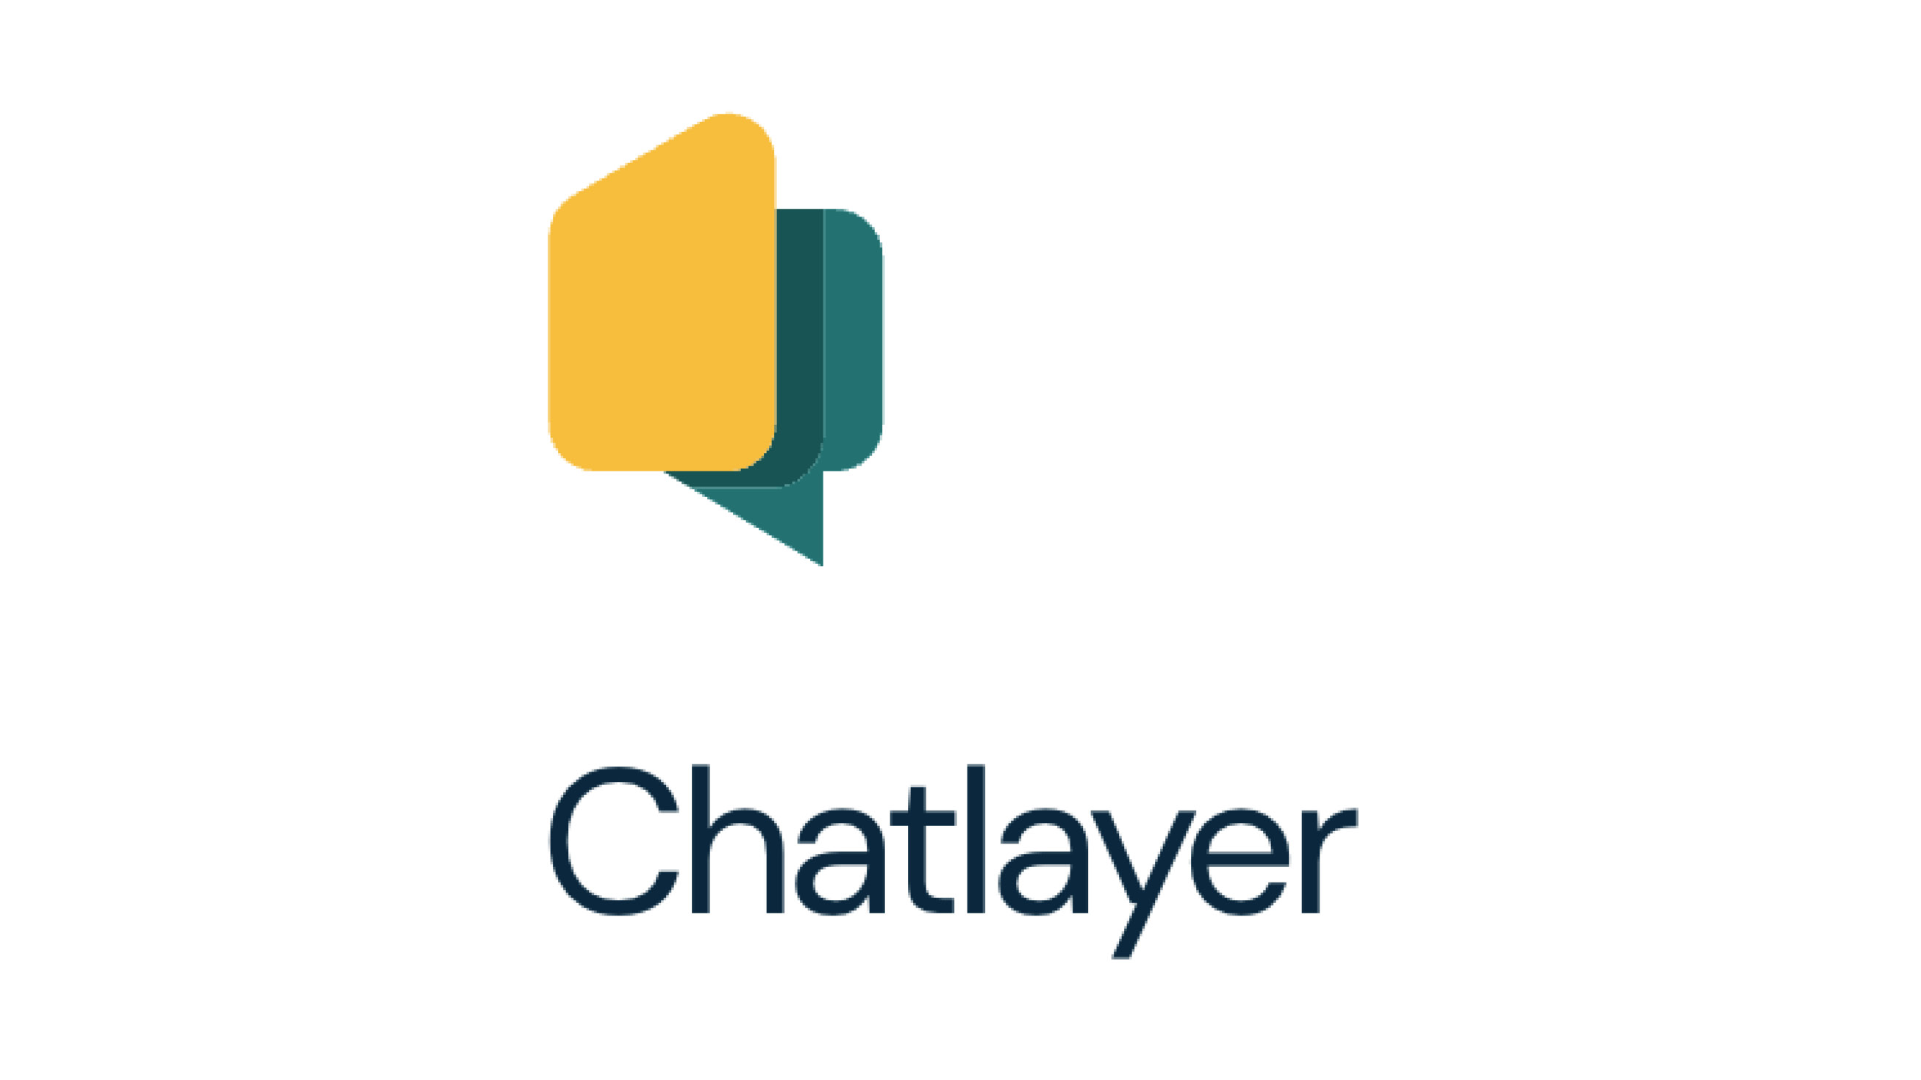 Chatlayer by Sinch